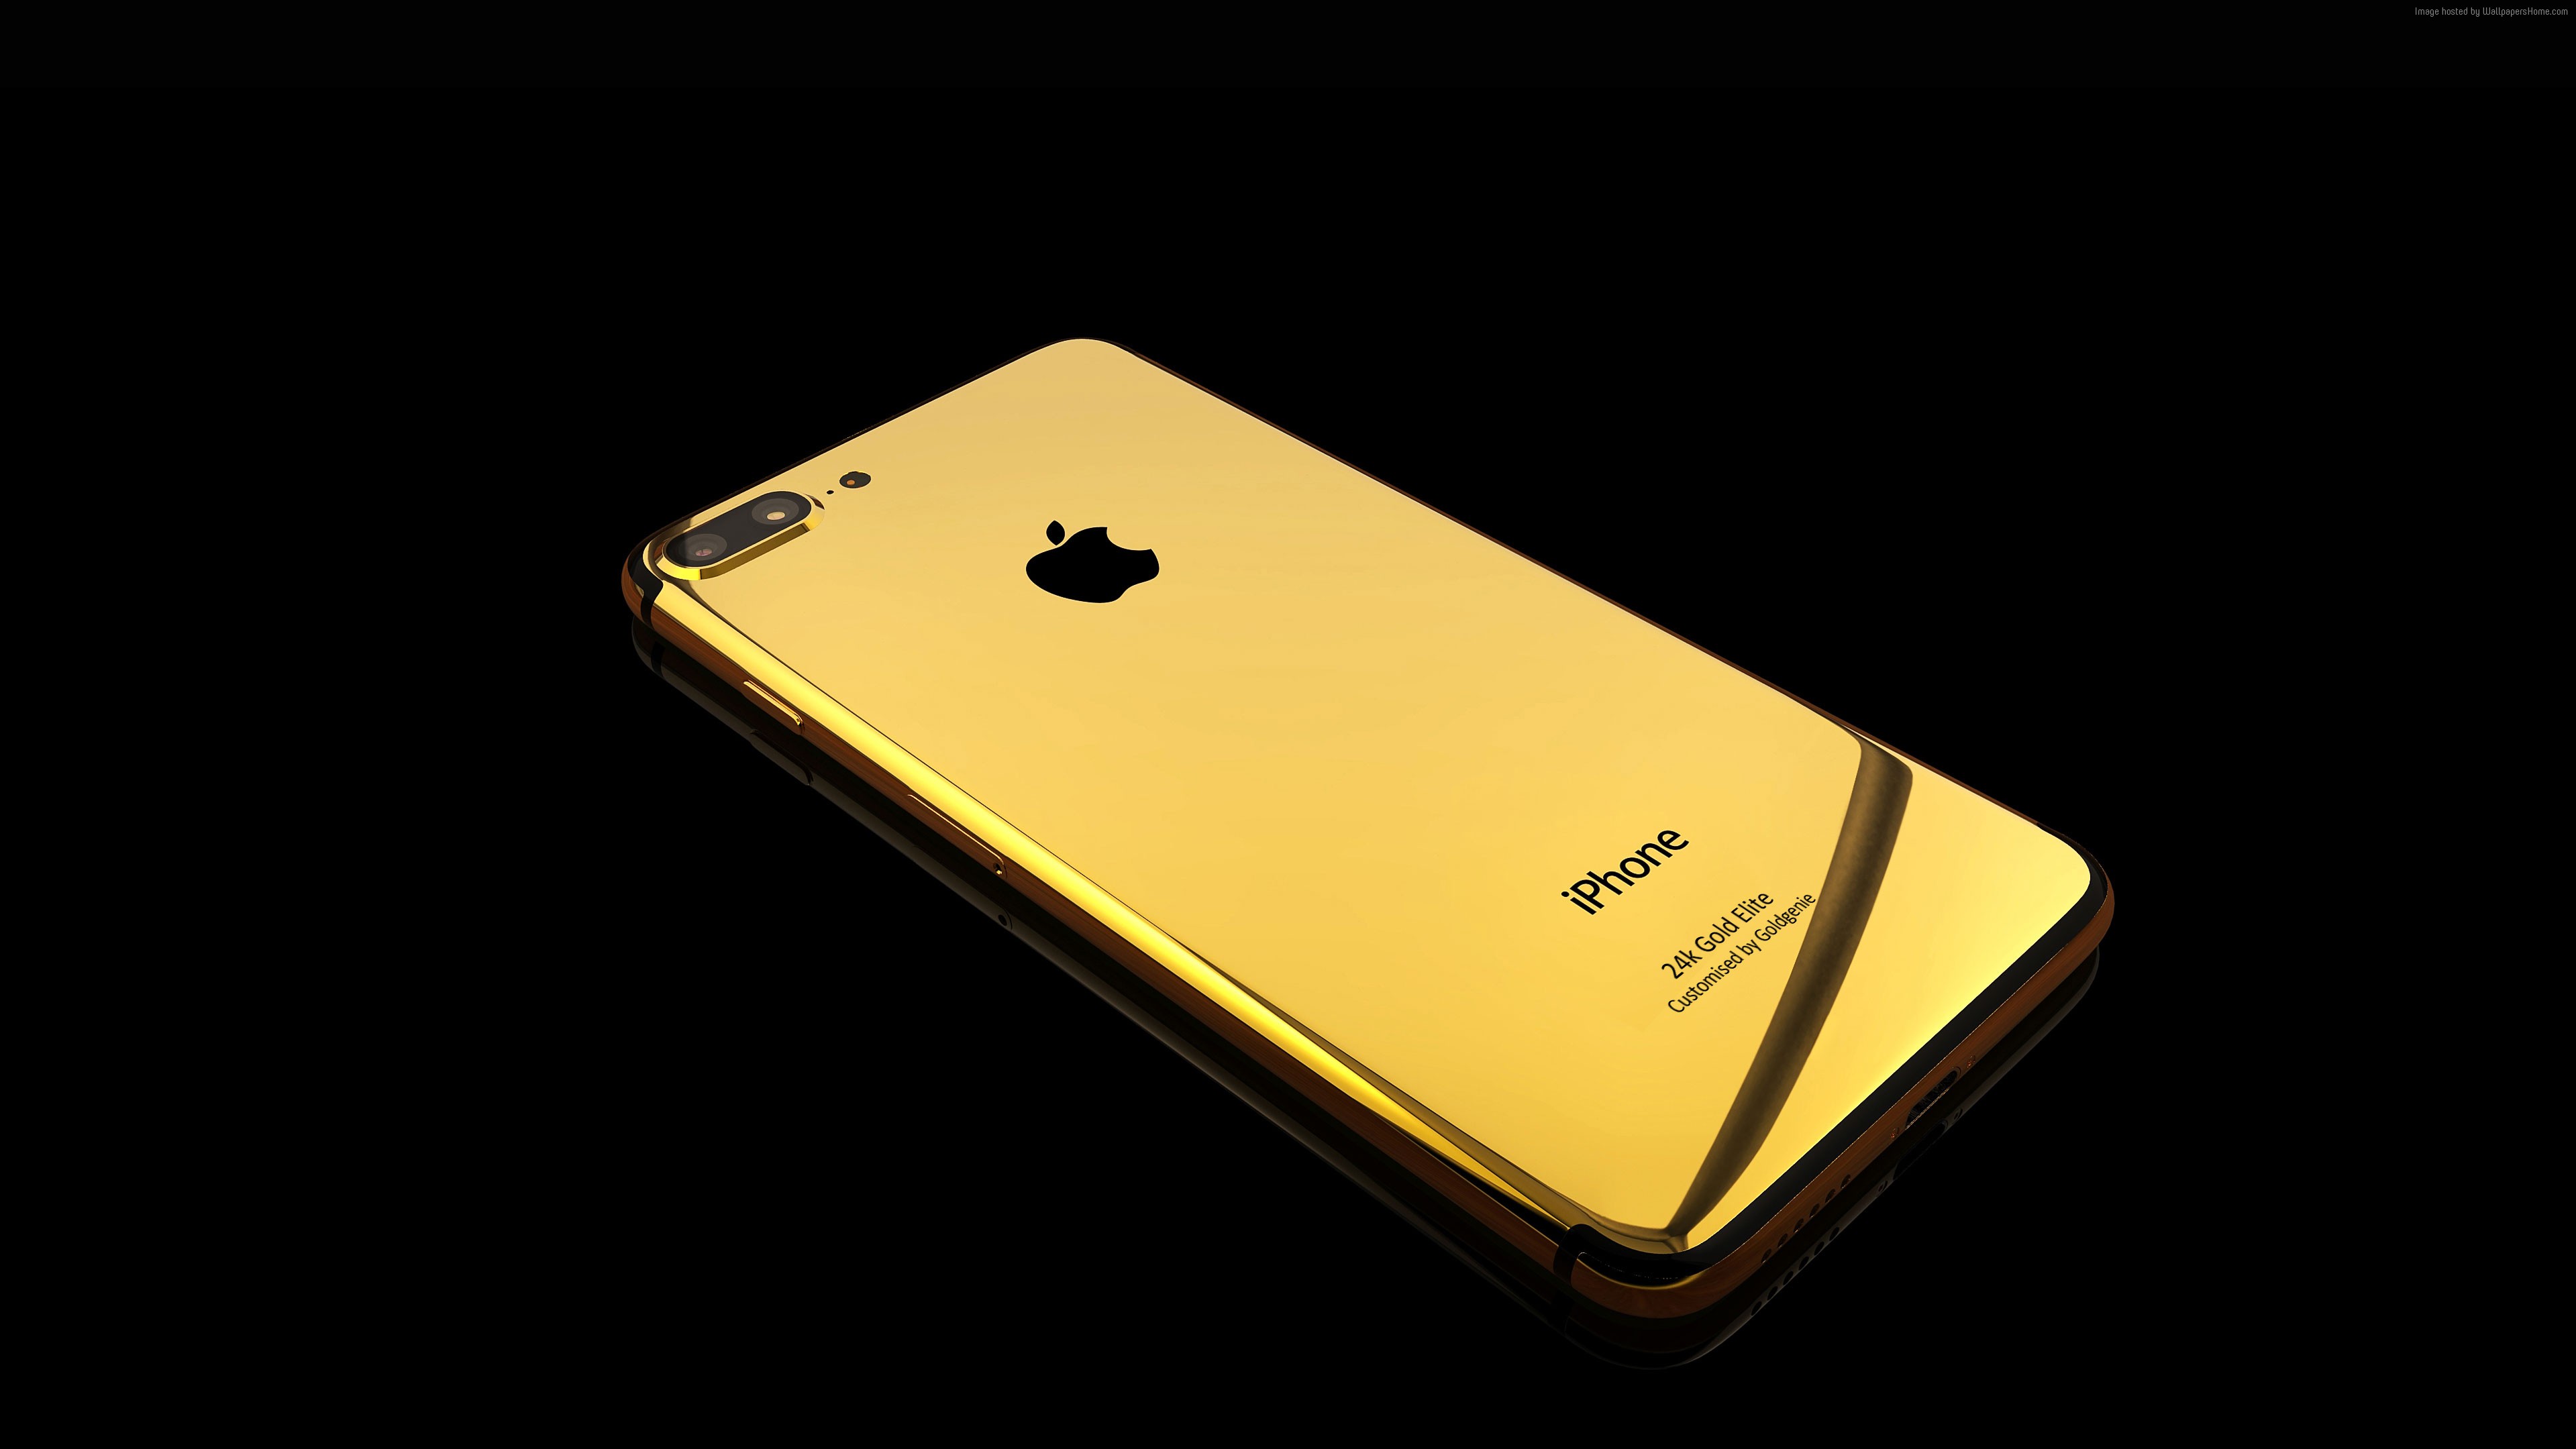 Iphone 11 Pro Max Gold - 3839x2160 Wallpaper 